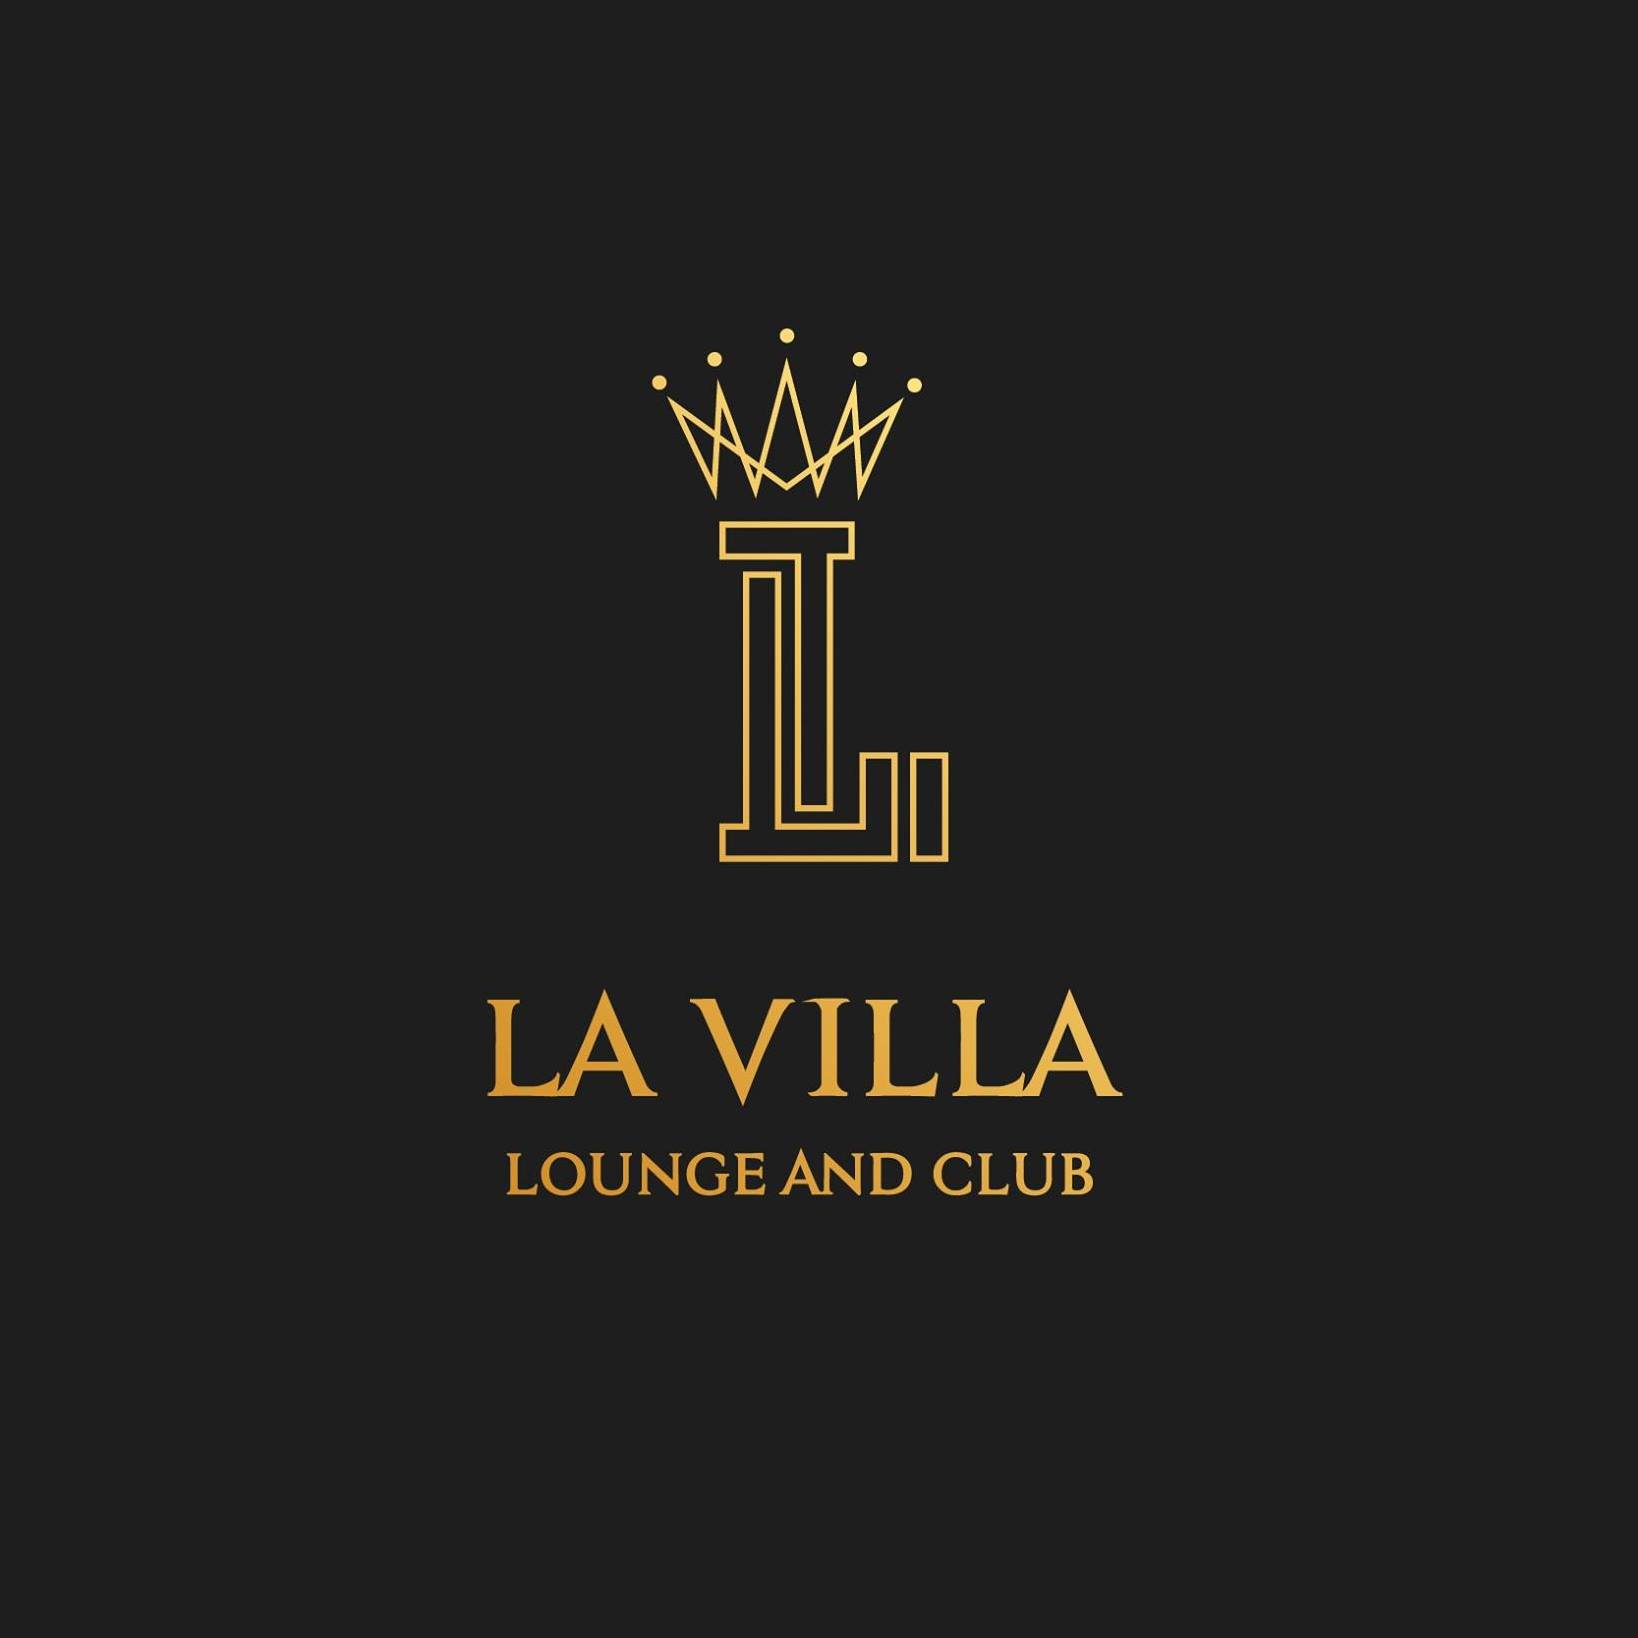 Lavilla Lounge and Club